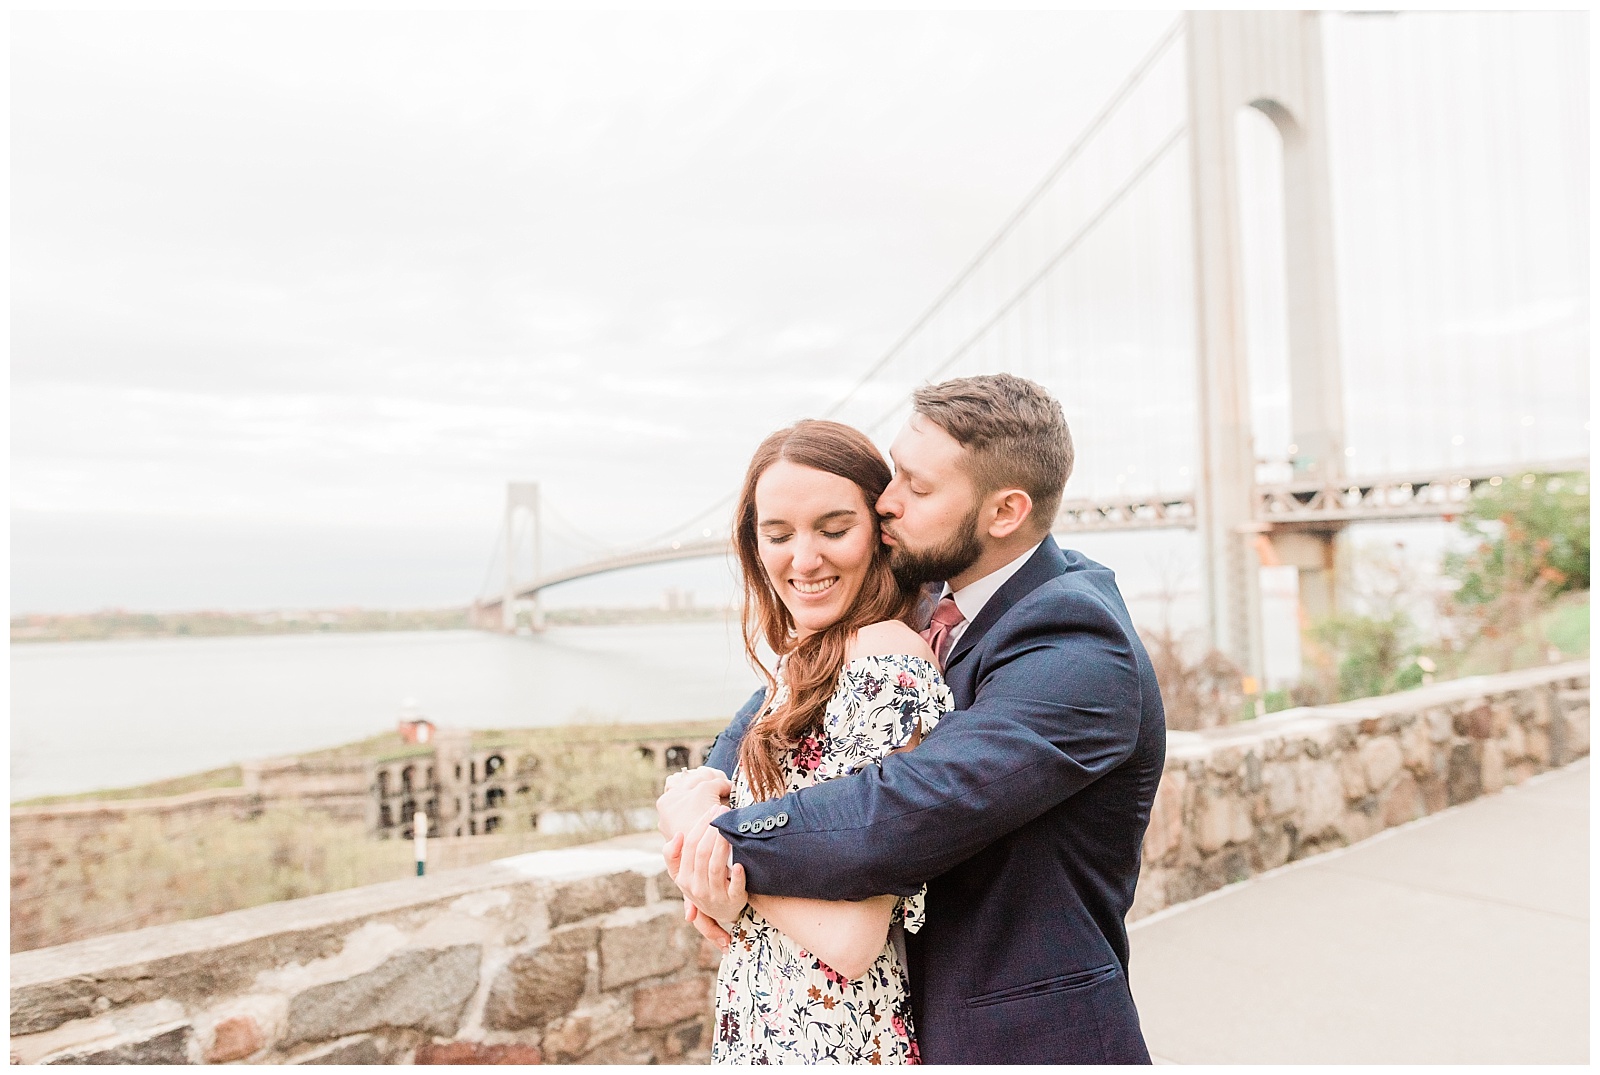 A man kisses his fiancee on the temple by the Verrazzano Bridge in Staten Island.